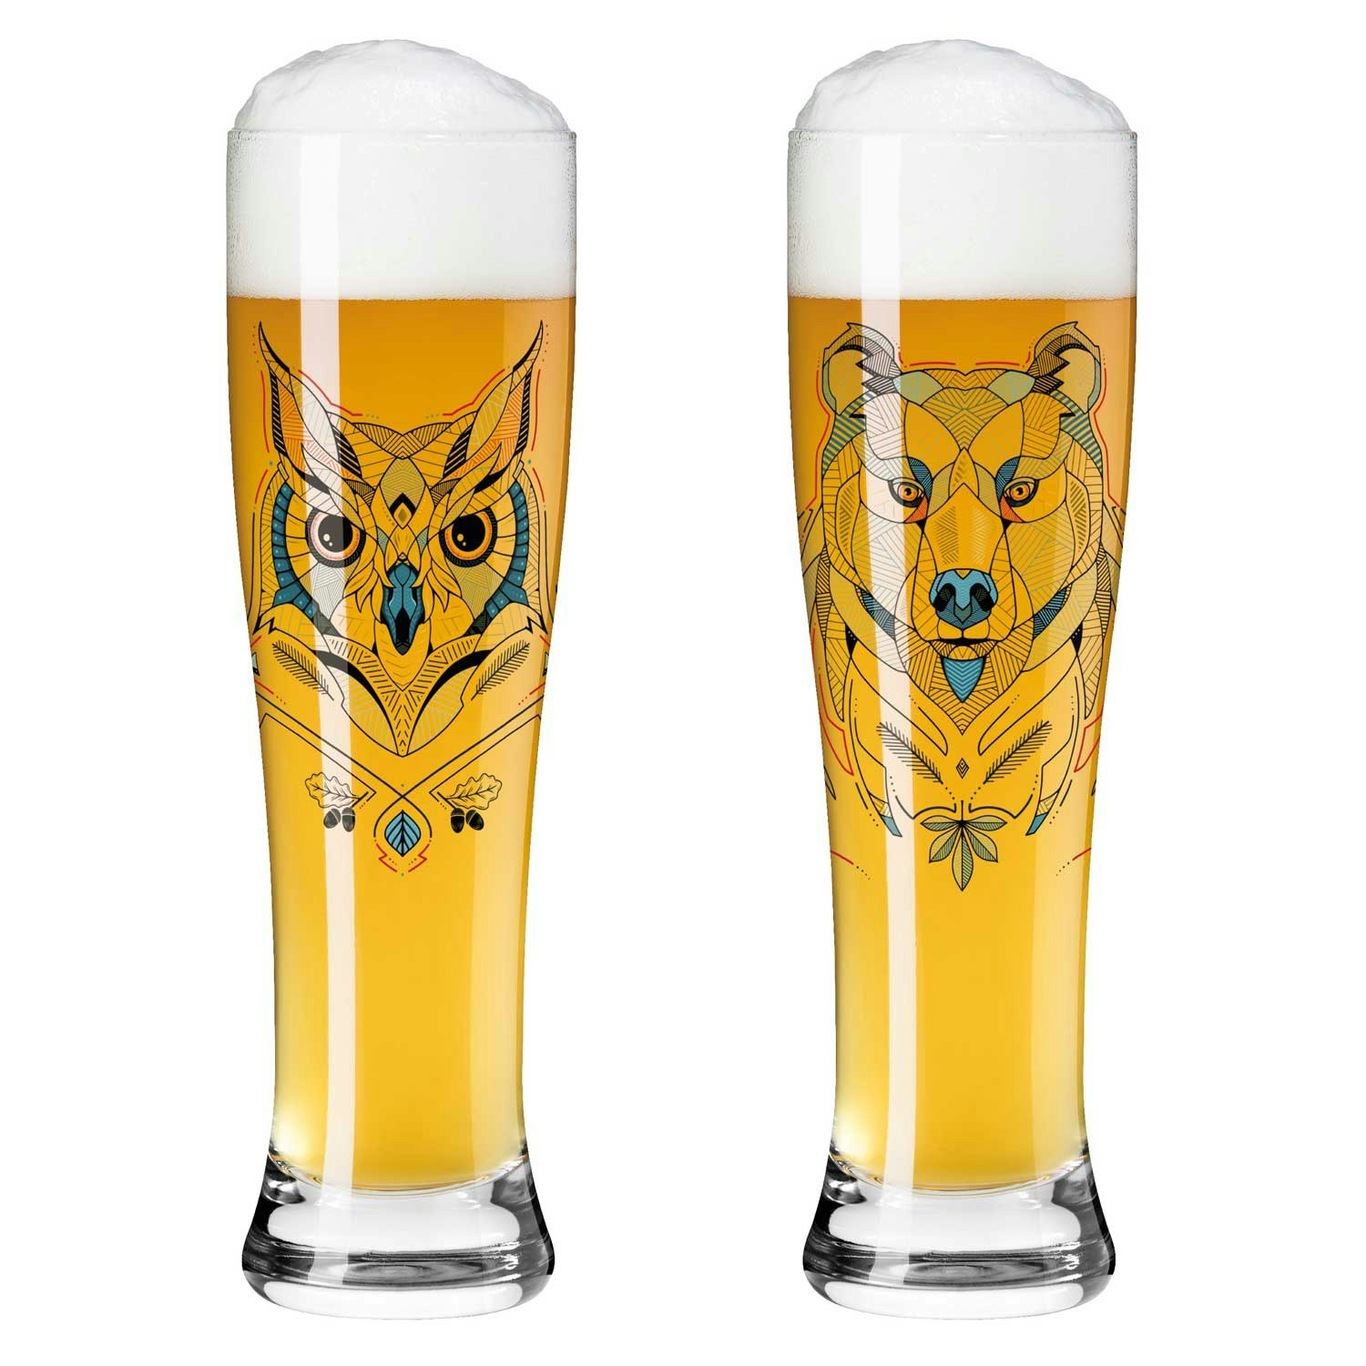 Brauchzeit Beer Glasses 2-pack, #1 & 2